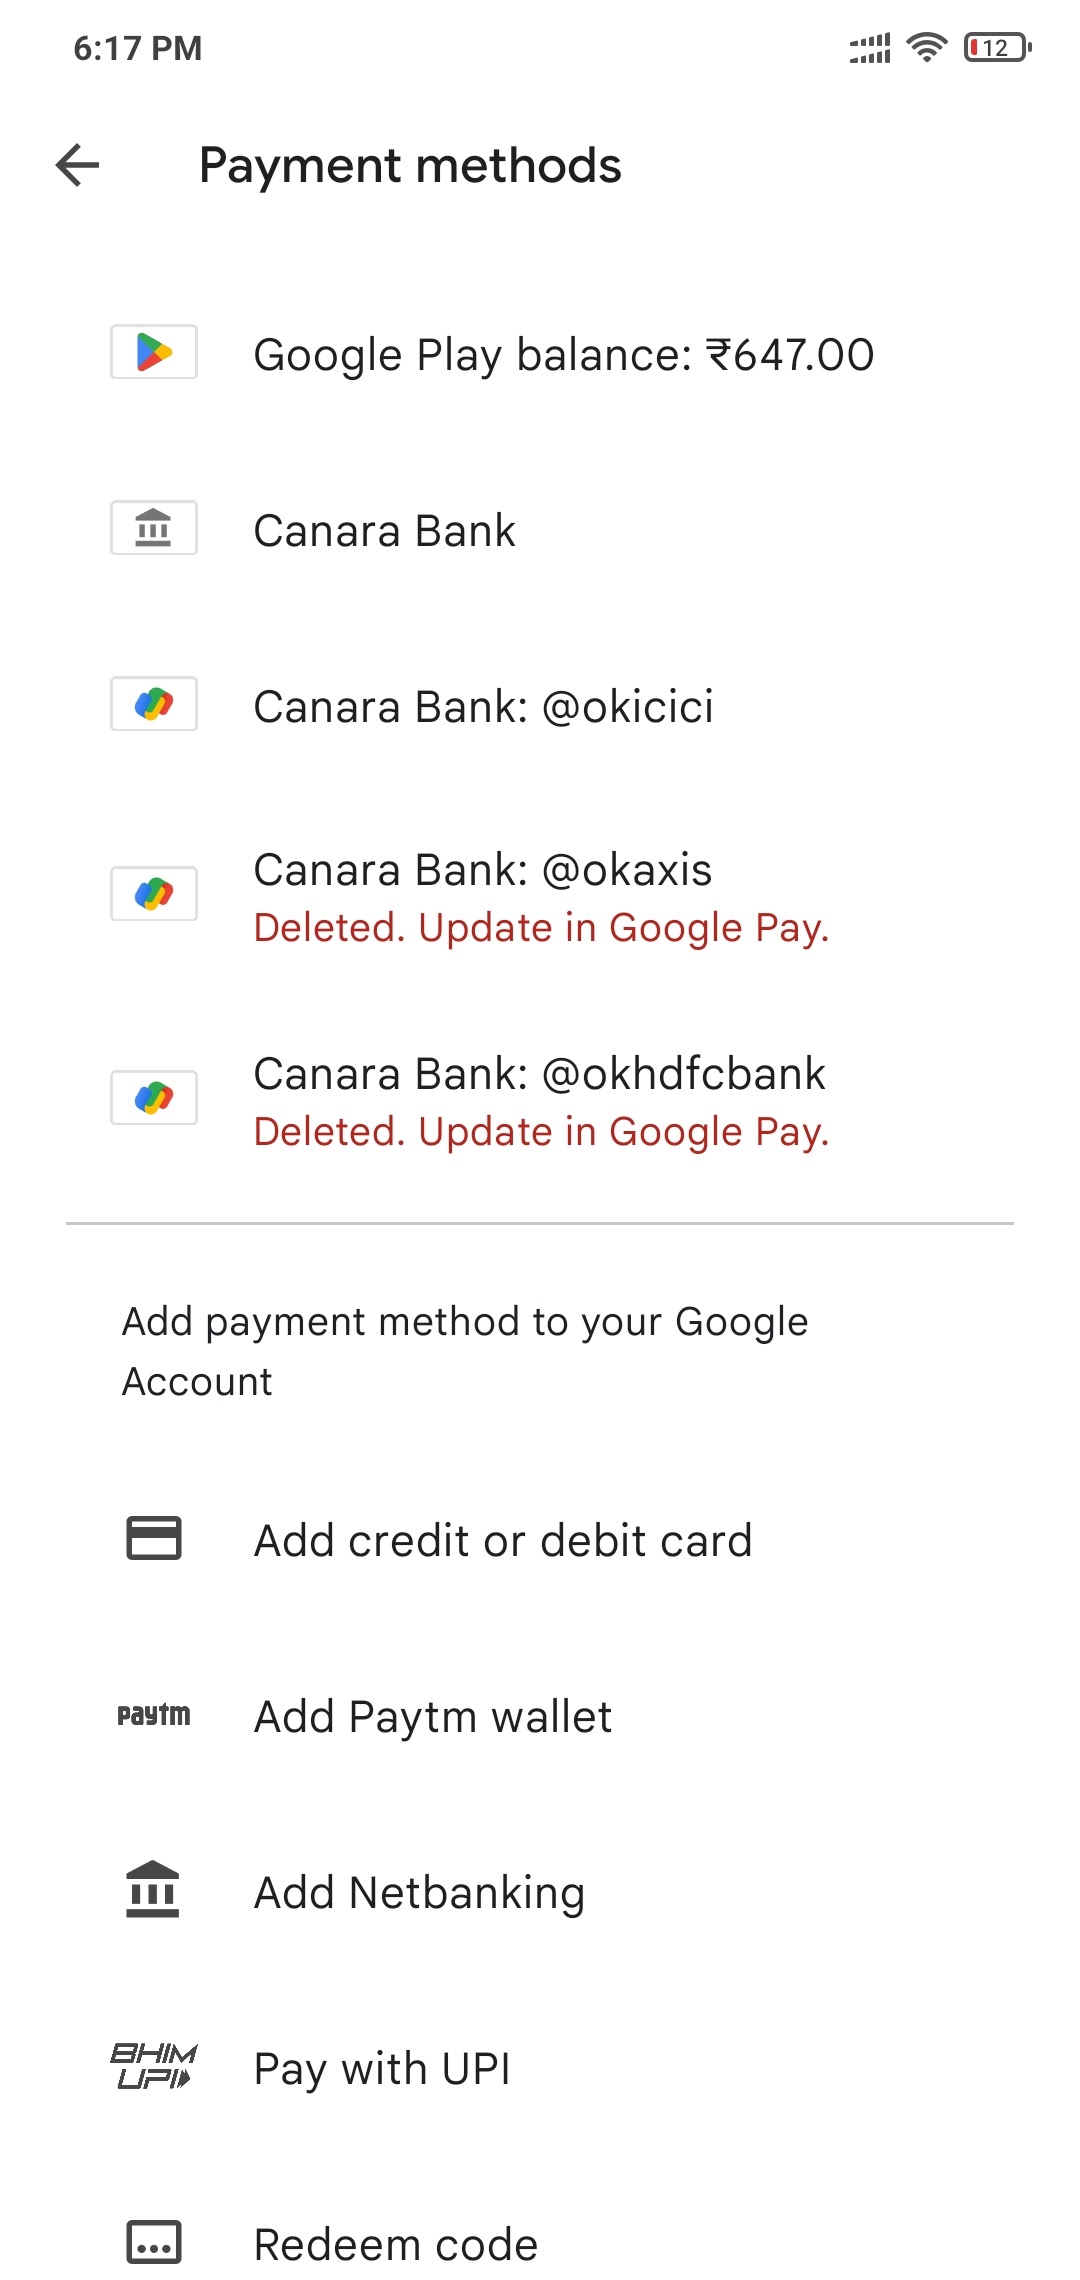 Easy Ways to Earn Google Play Credit - Swagbucks Articles